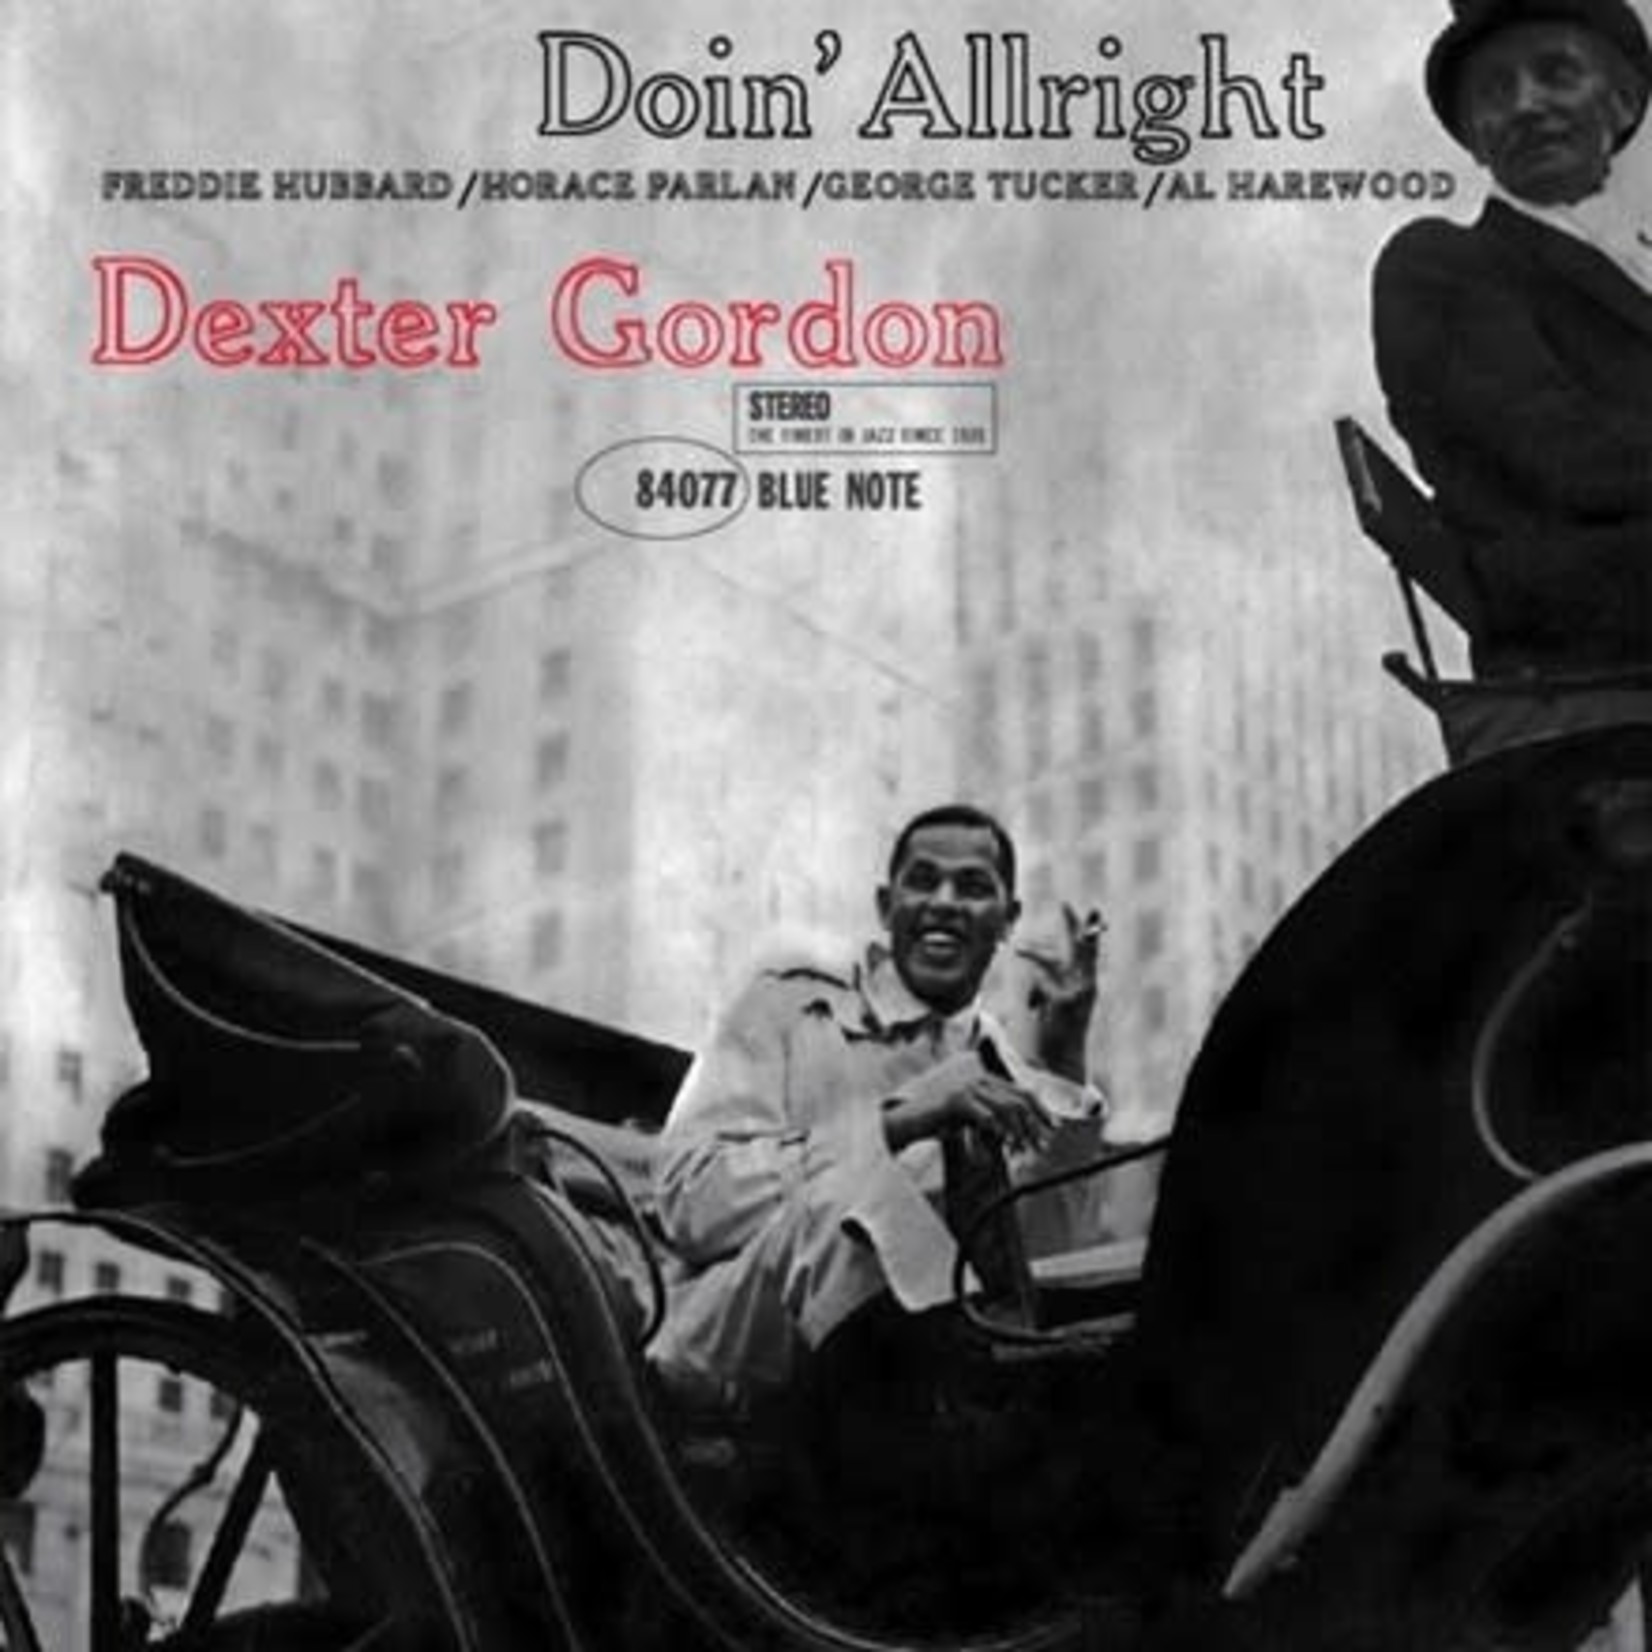 [New] Dexter Gordon - Doin' Allright (Blue Note 80 series)